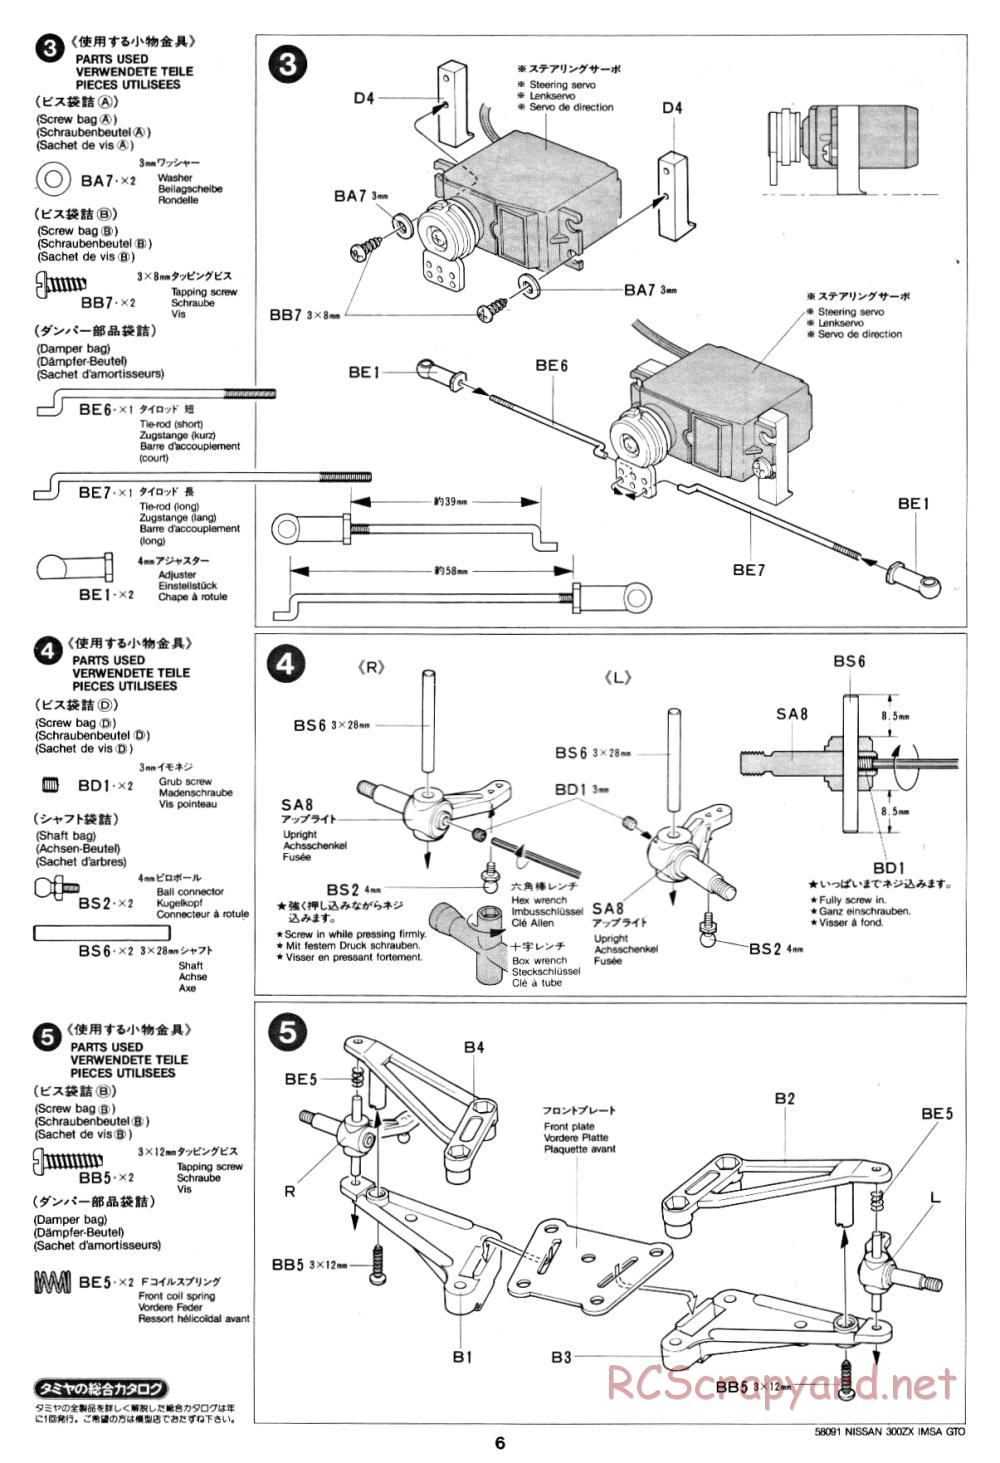 Tamiya - Nissan 300ZX IMSA GTO - 58091 - Manual - Page 6